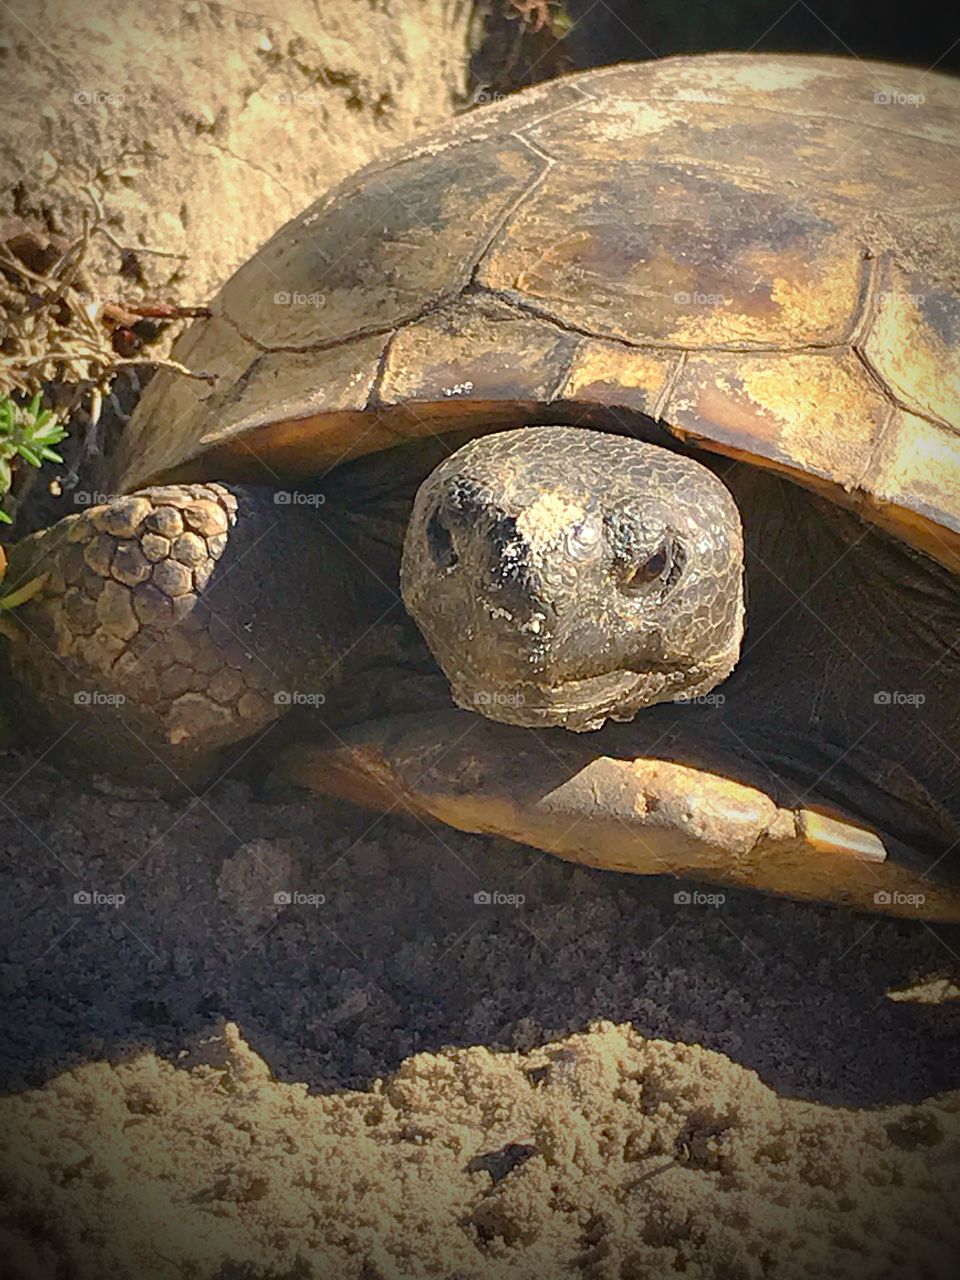 Turtle time - Amelia Island Florida 